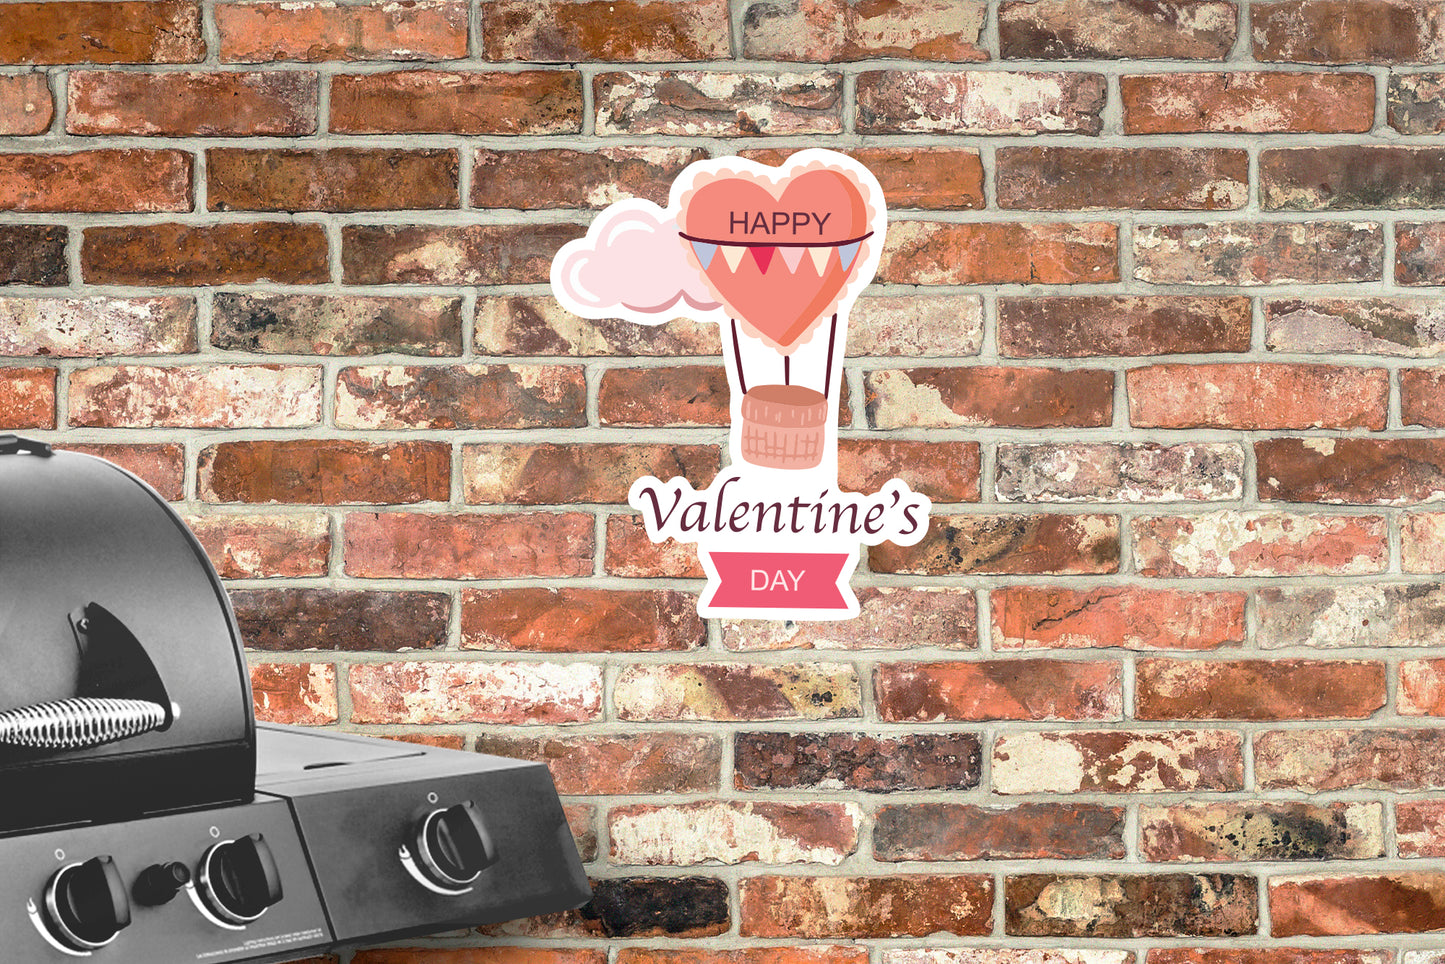 Valentine's Day: Love Message - Outdoor Graphic